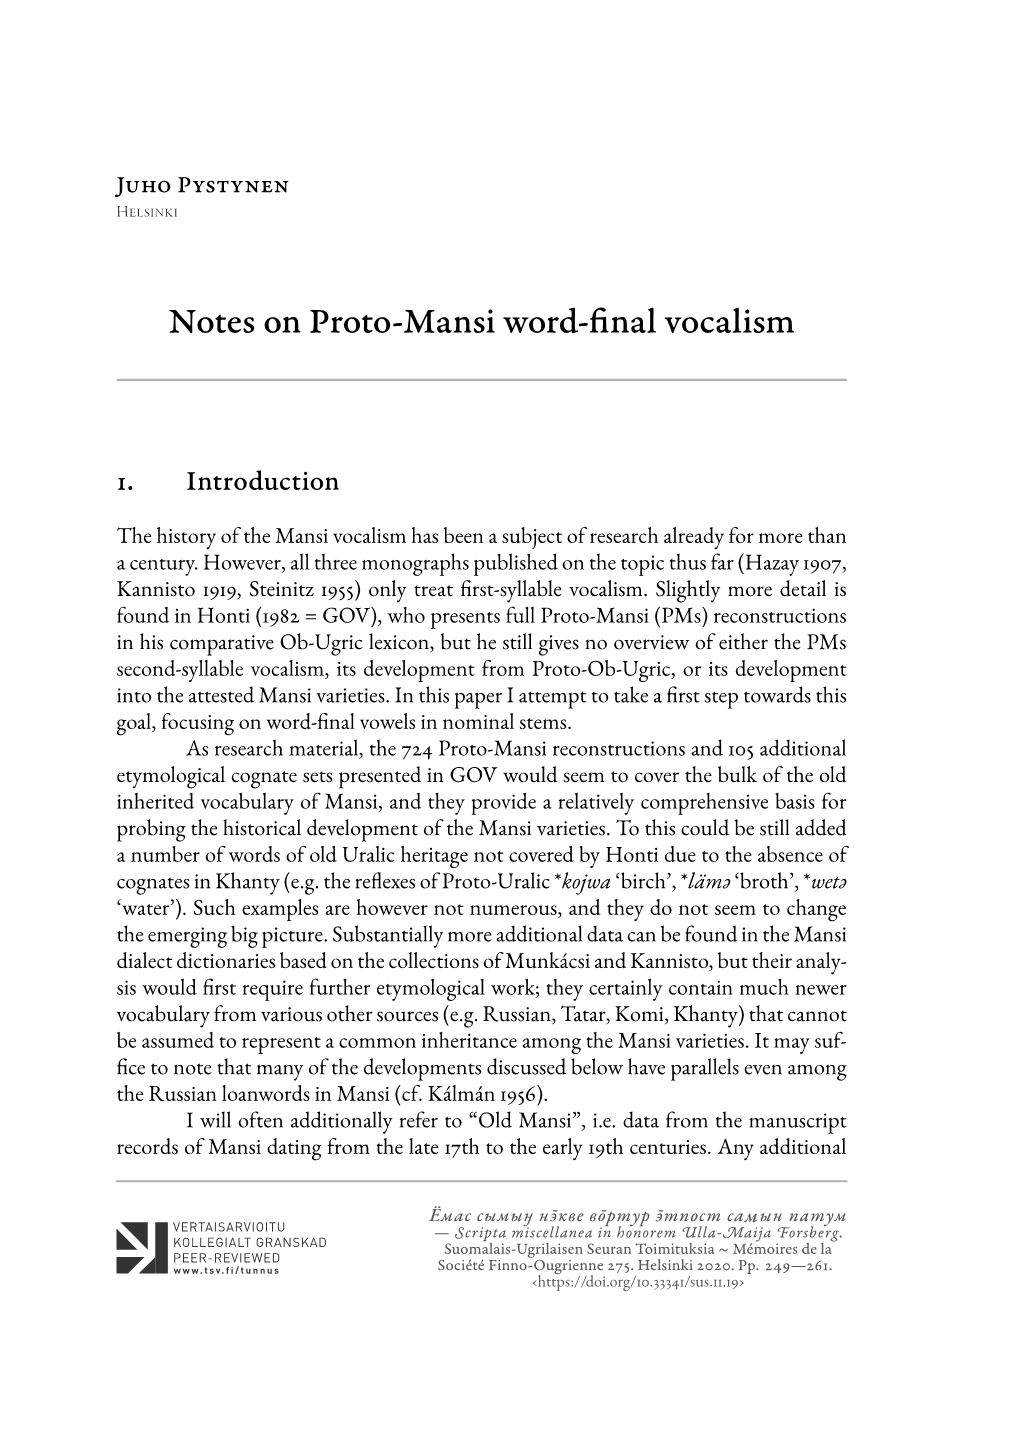 Notes on Proto-Mansi Word-Final Vocalism